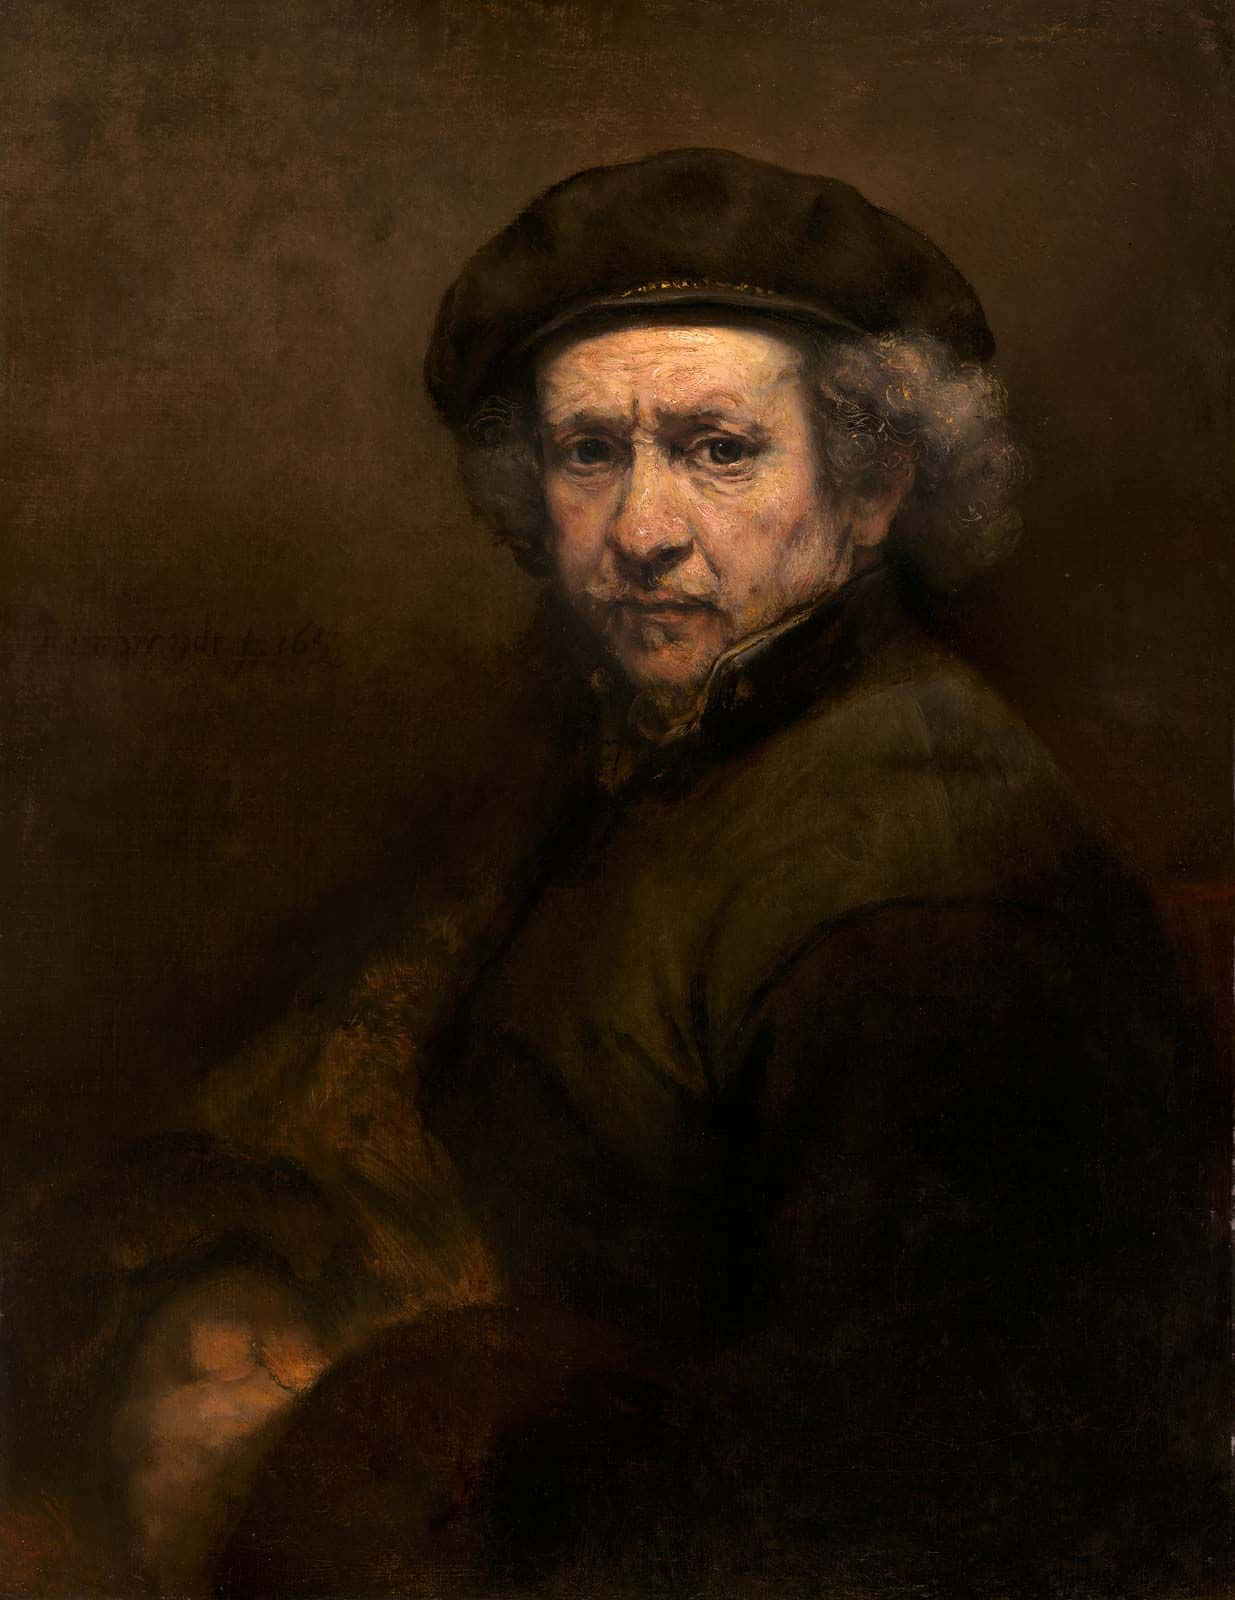 Porträtbildvon Rembrandt